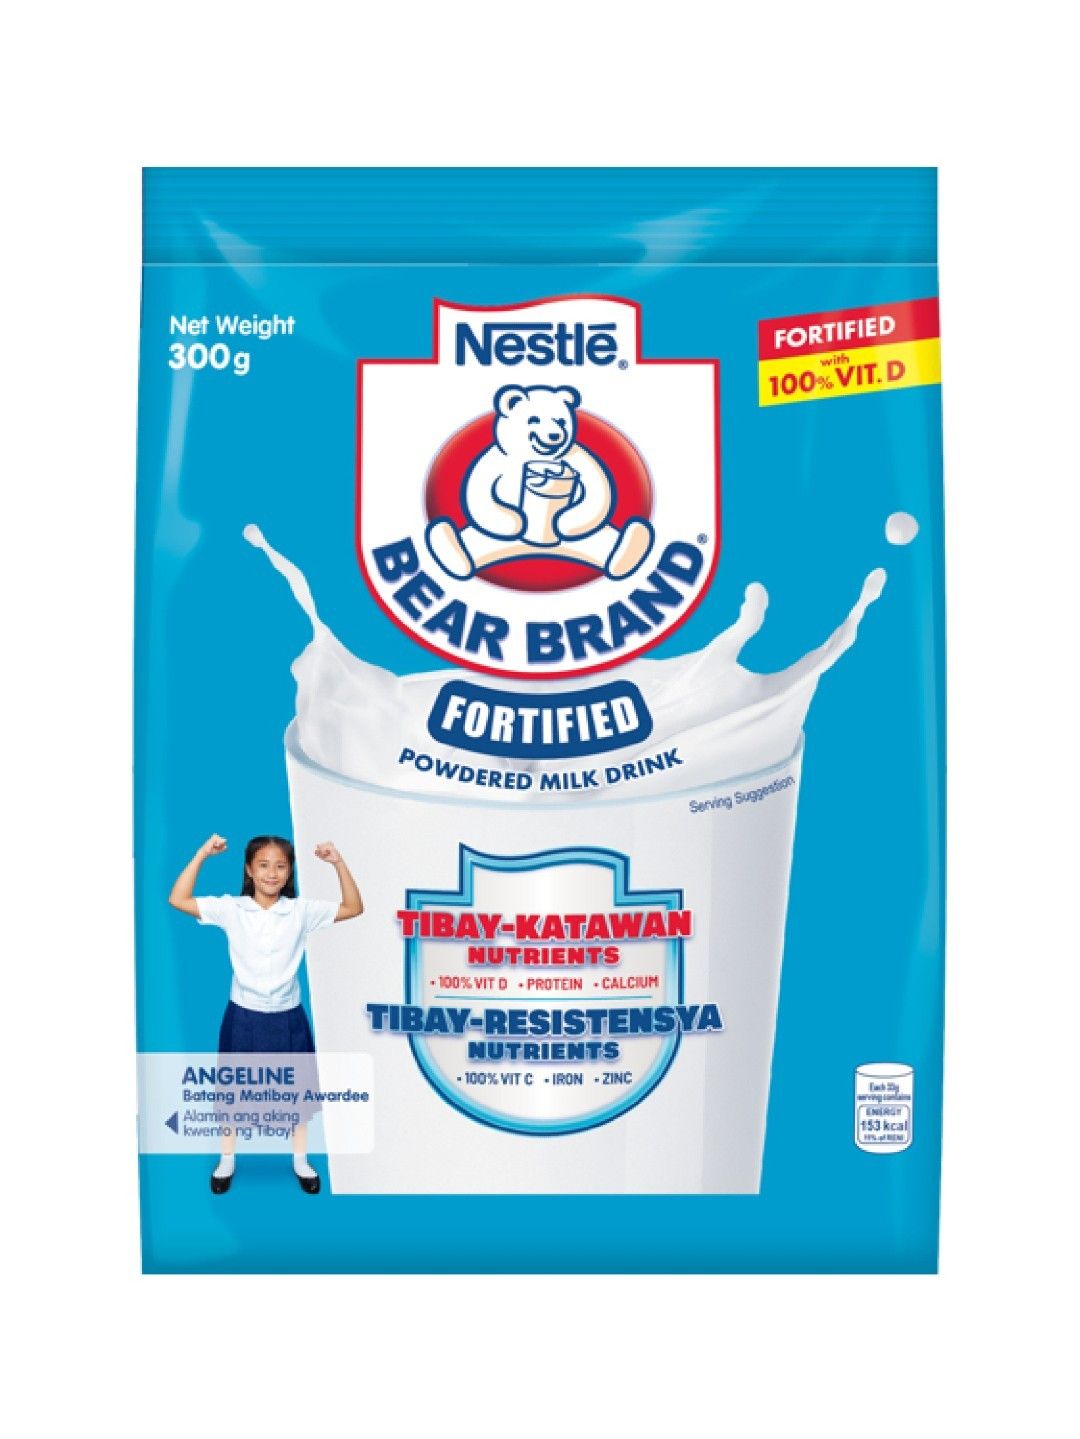 Bear Brand Fortified Powdered Milk Drink (300g) [Expiry: Sep 2024]